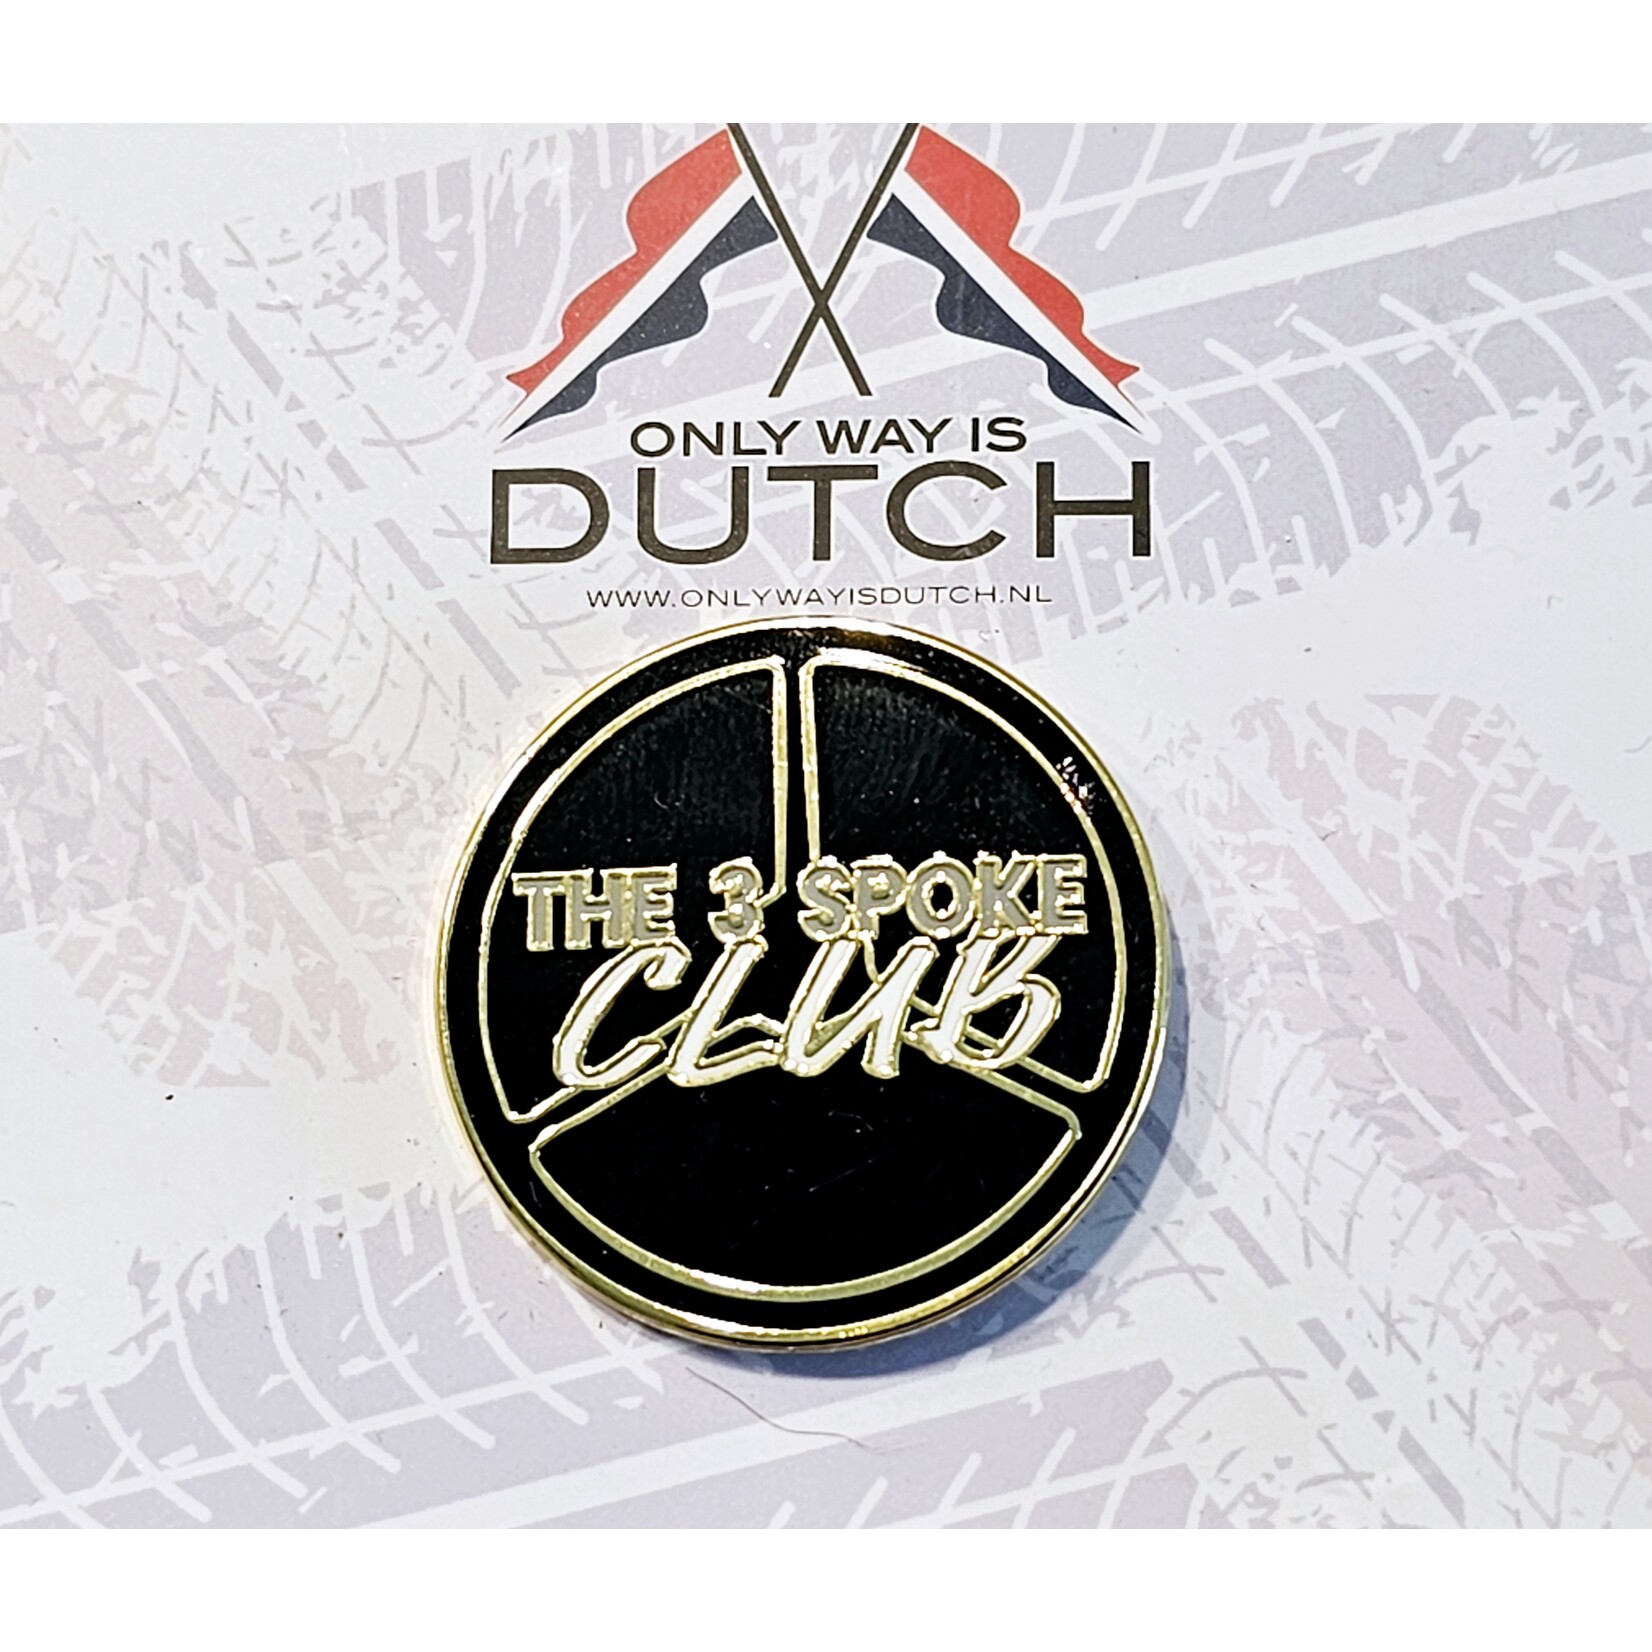 ONLY WAY IS DUTCH Only Way Is Dutch Pin - 3 Spoke Club